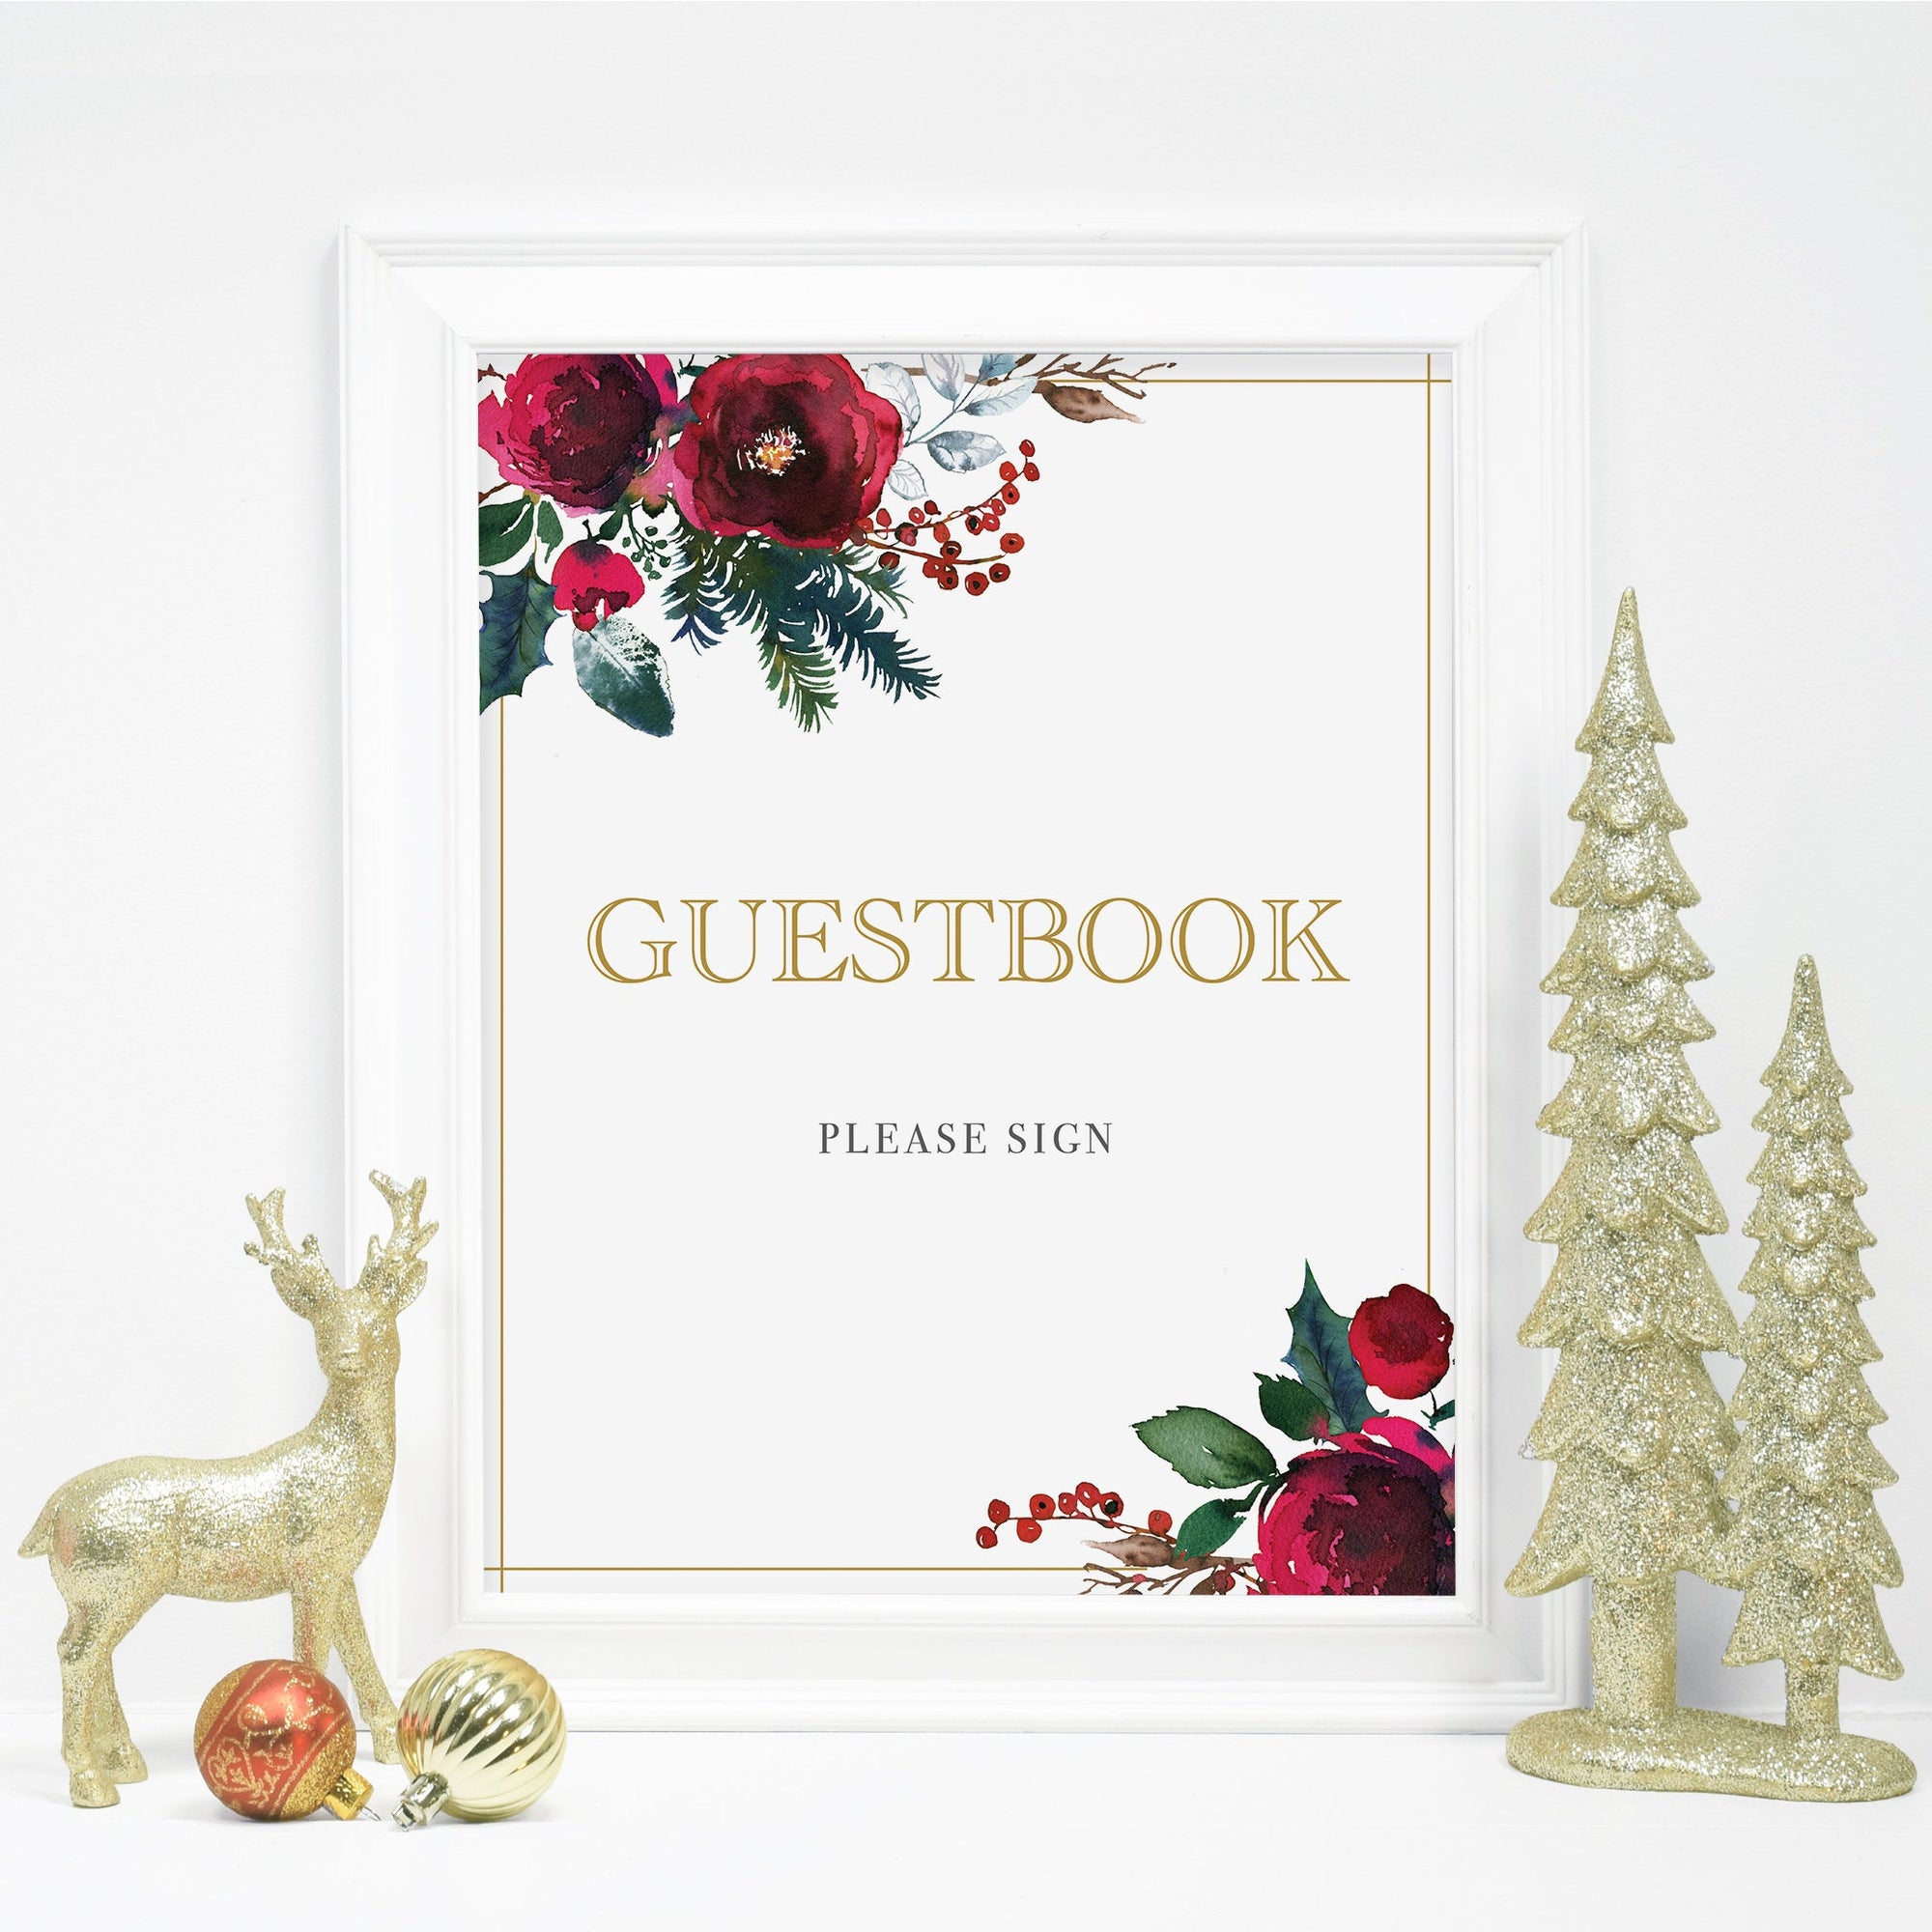 Christmas Wedding Guestbook Sign Printable, Christmas Bridal Shower Decorations, Christmas Baby Shower Decor, INSTANT DOWNLOAD - CG100 - @PlumPolkaDot 